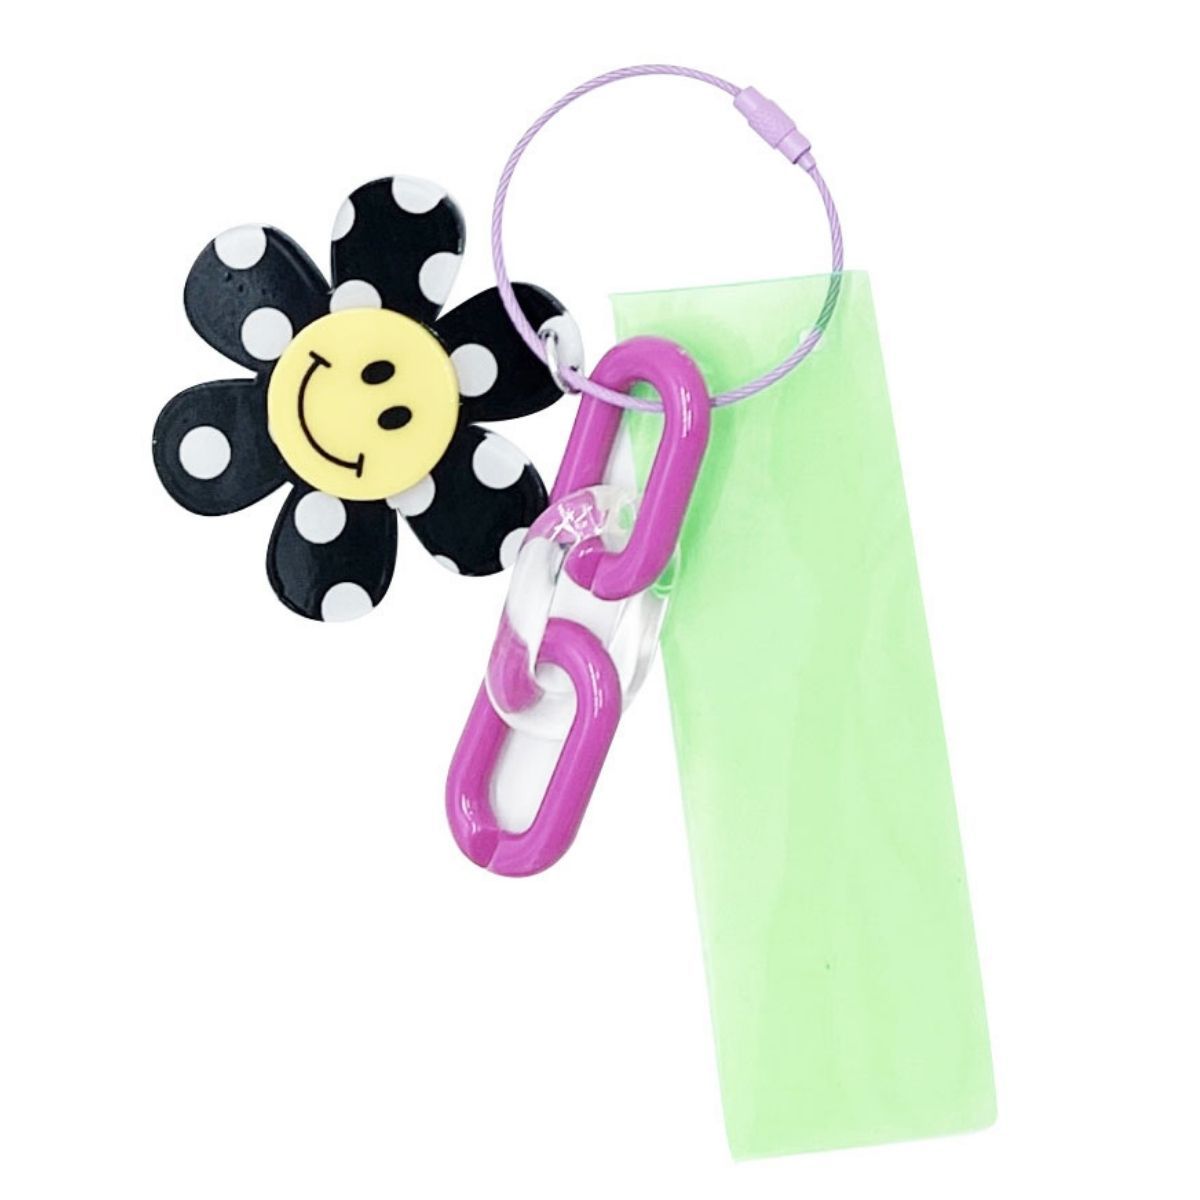 Neon Green Black Smiley Keychain Bag Charm